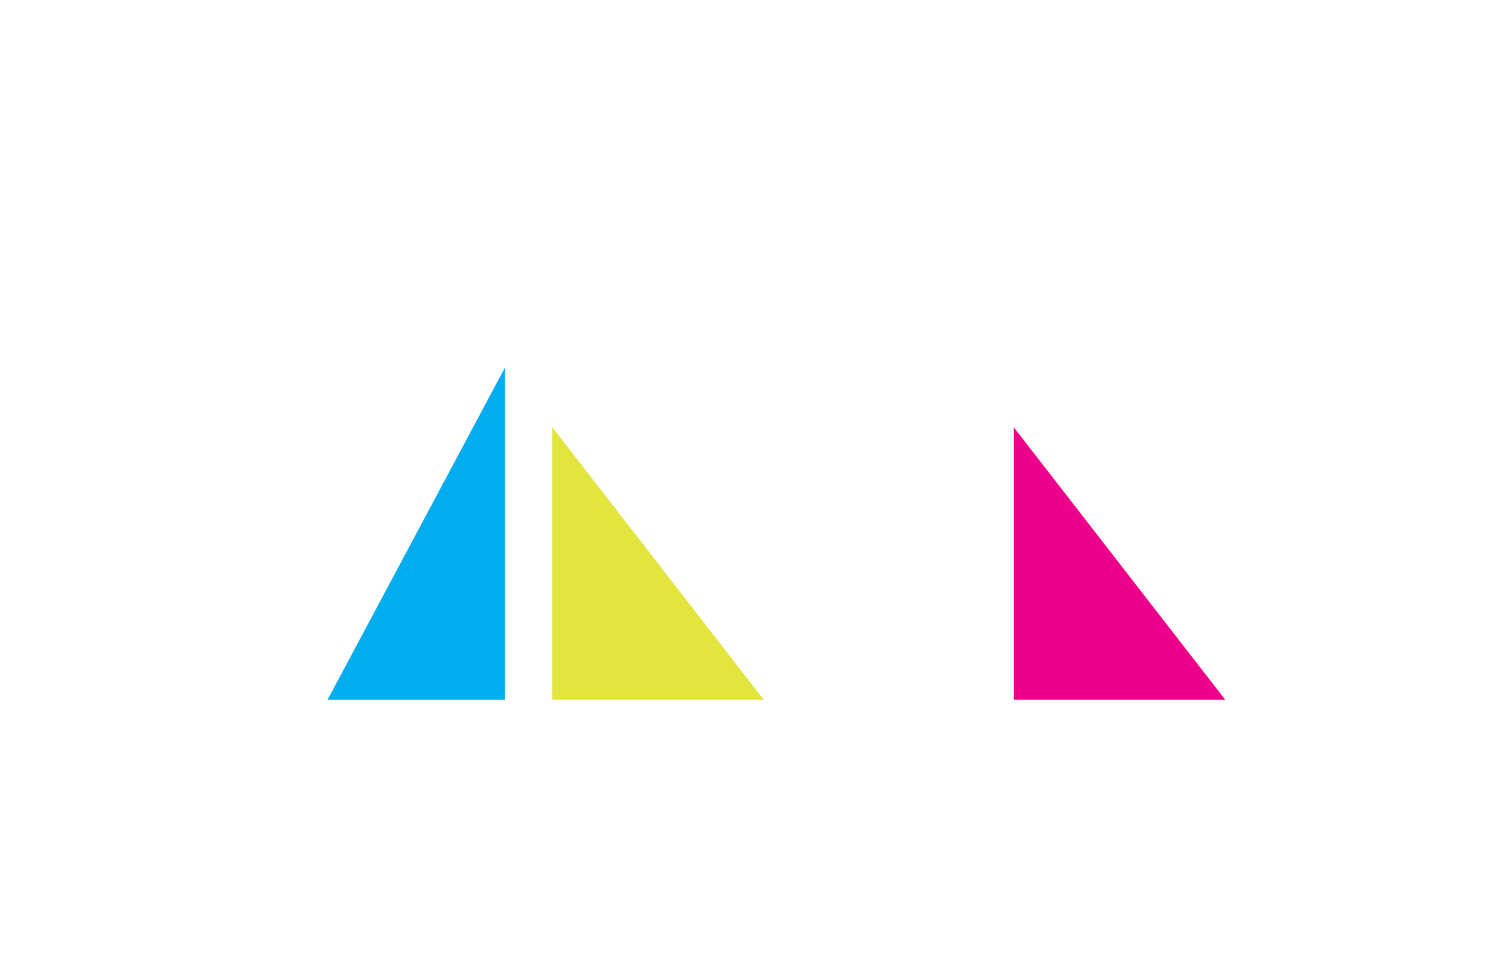 London School of Sailing